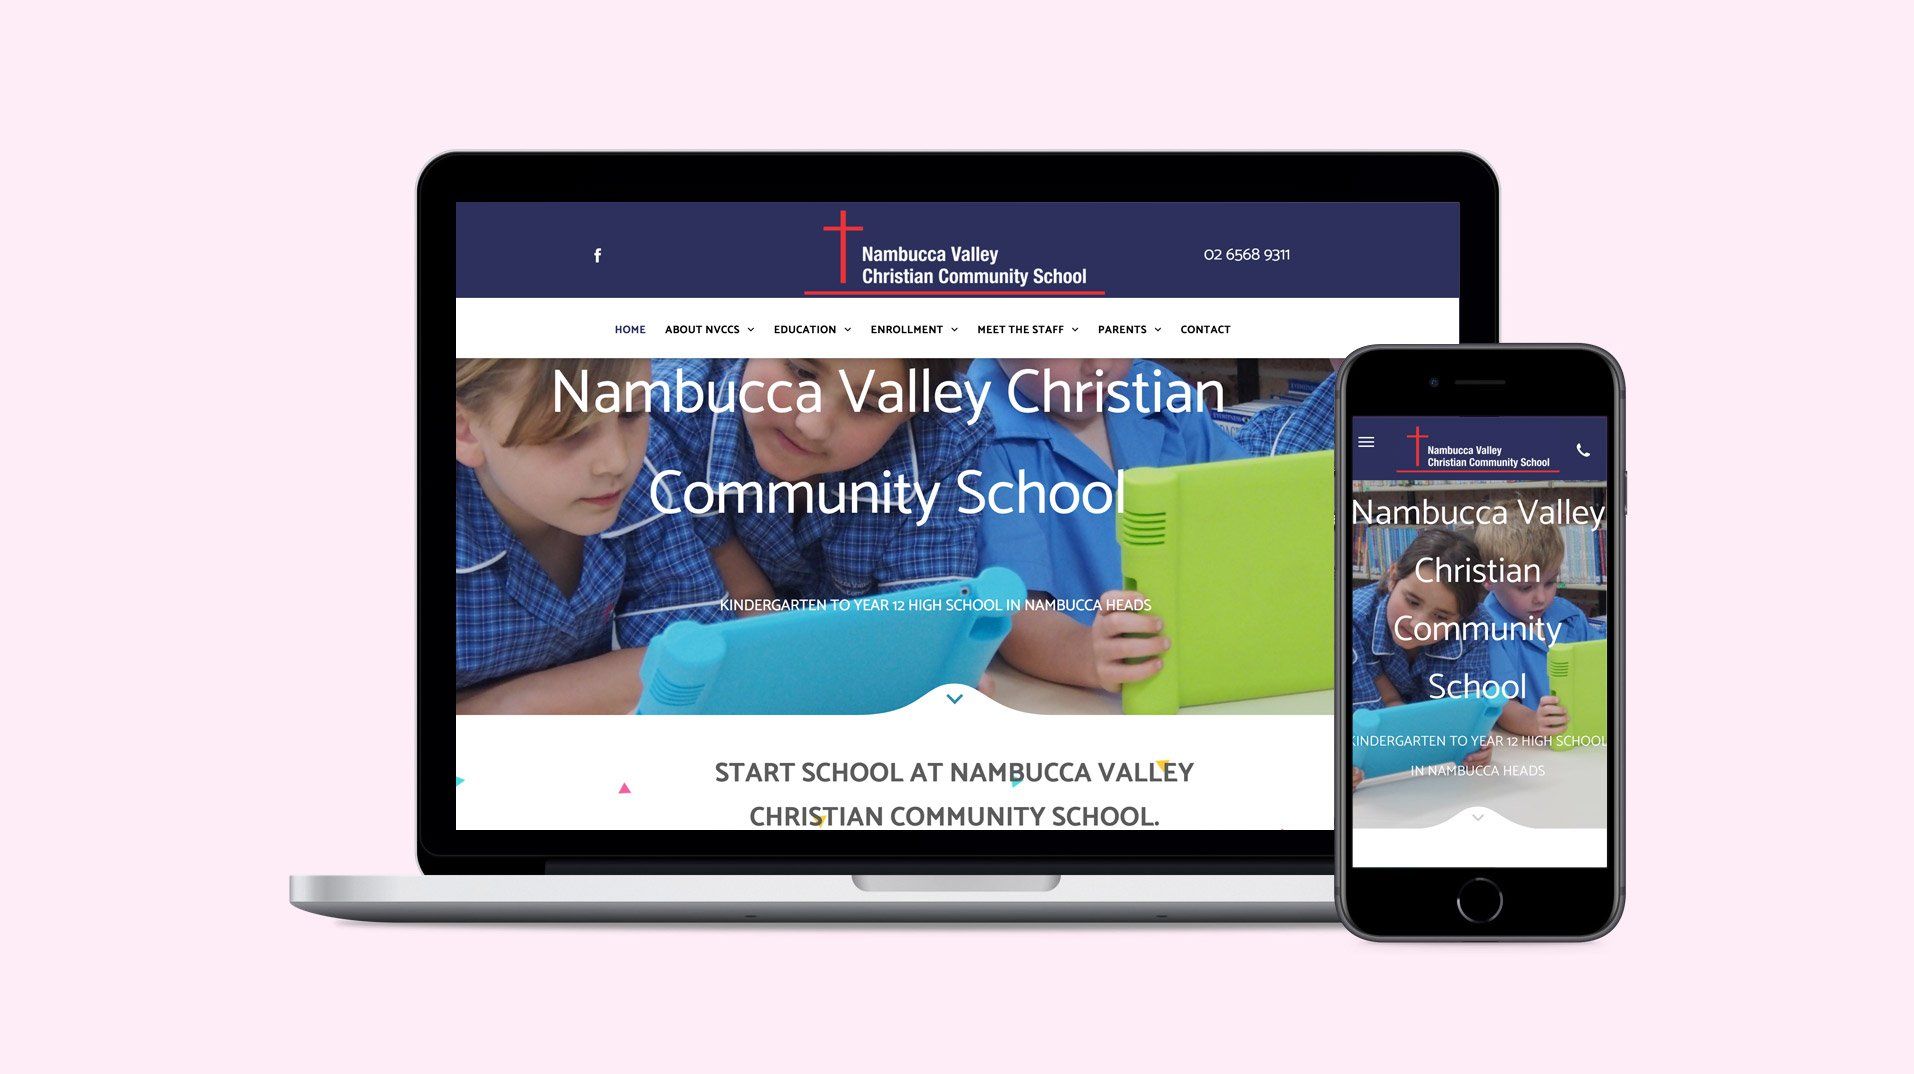 Nambucca Valley Christian Community School (NVCCS) website portfolio